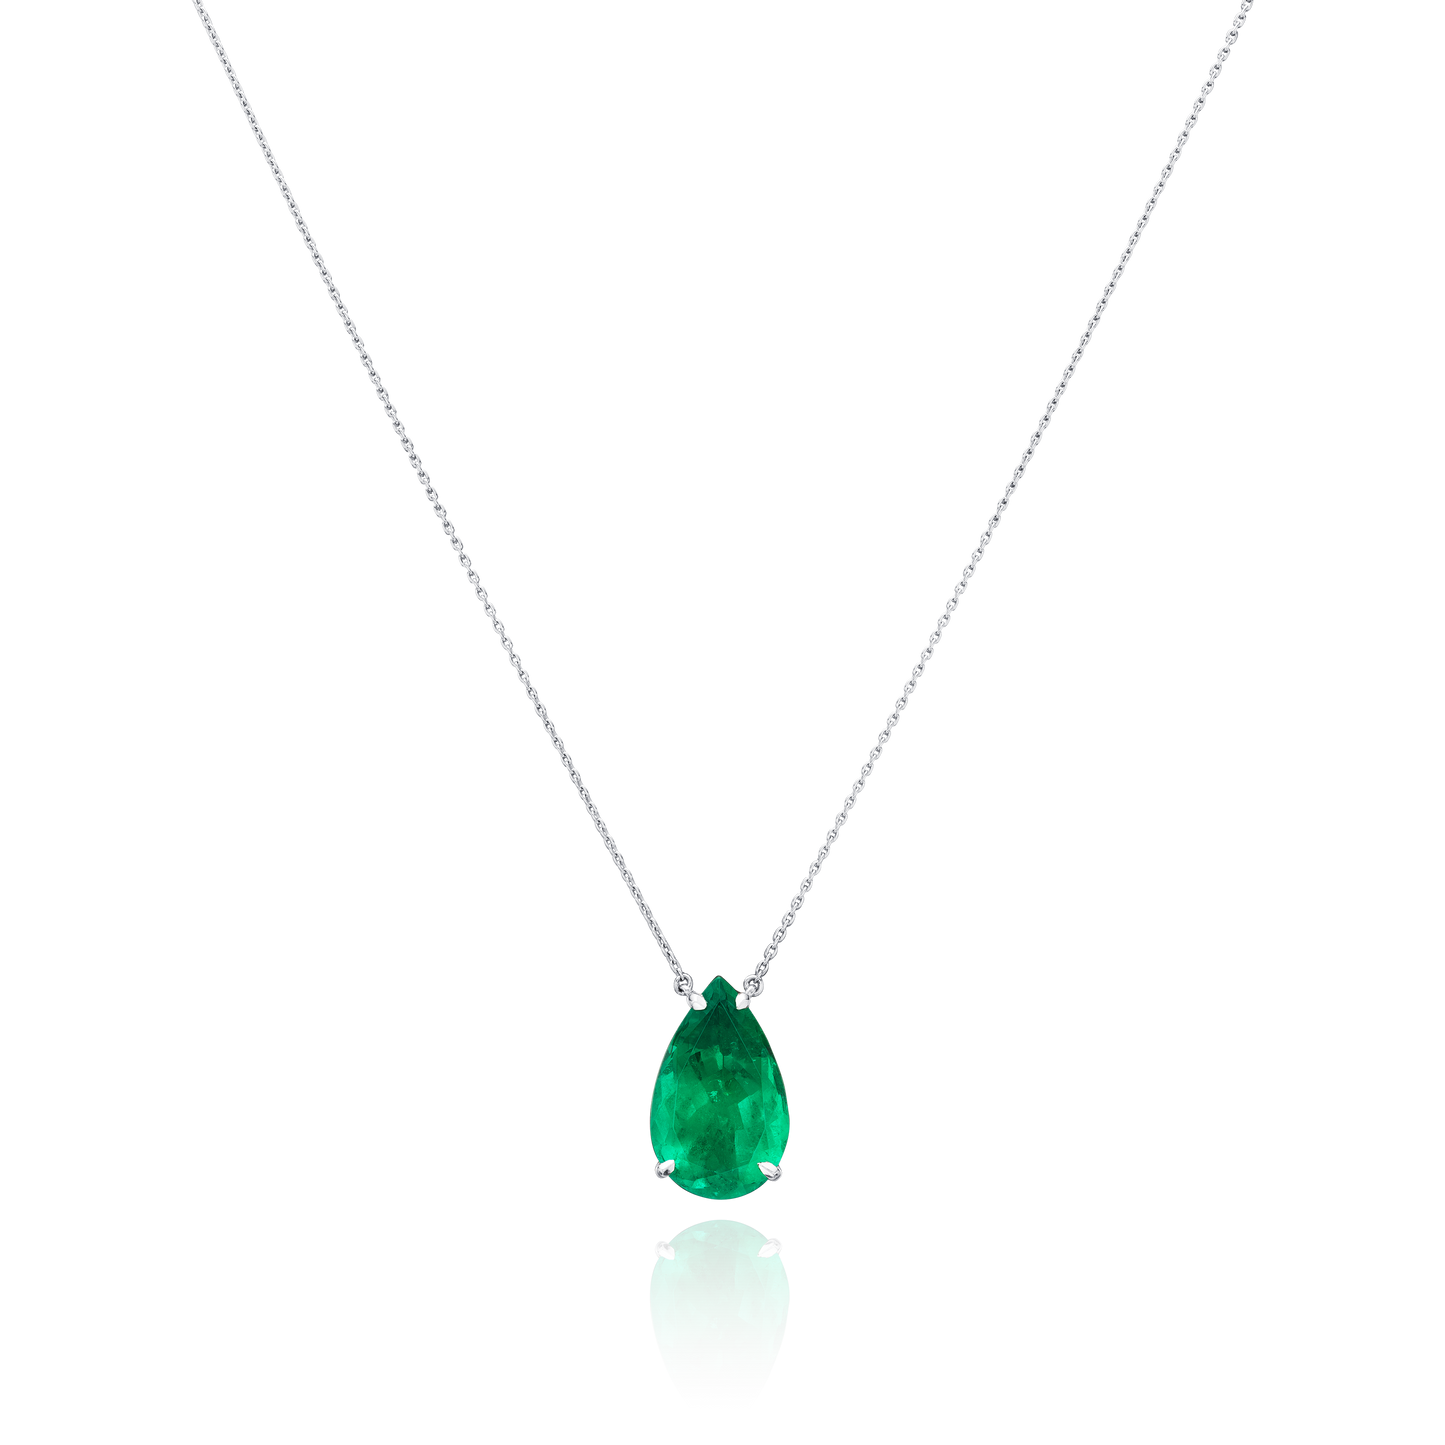 6.07cts Pear-Shape Natural Emerald Pendant